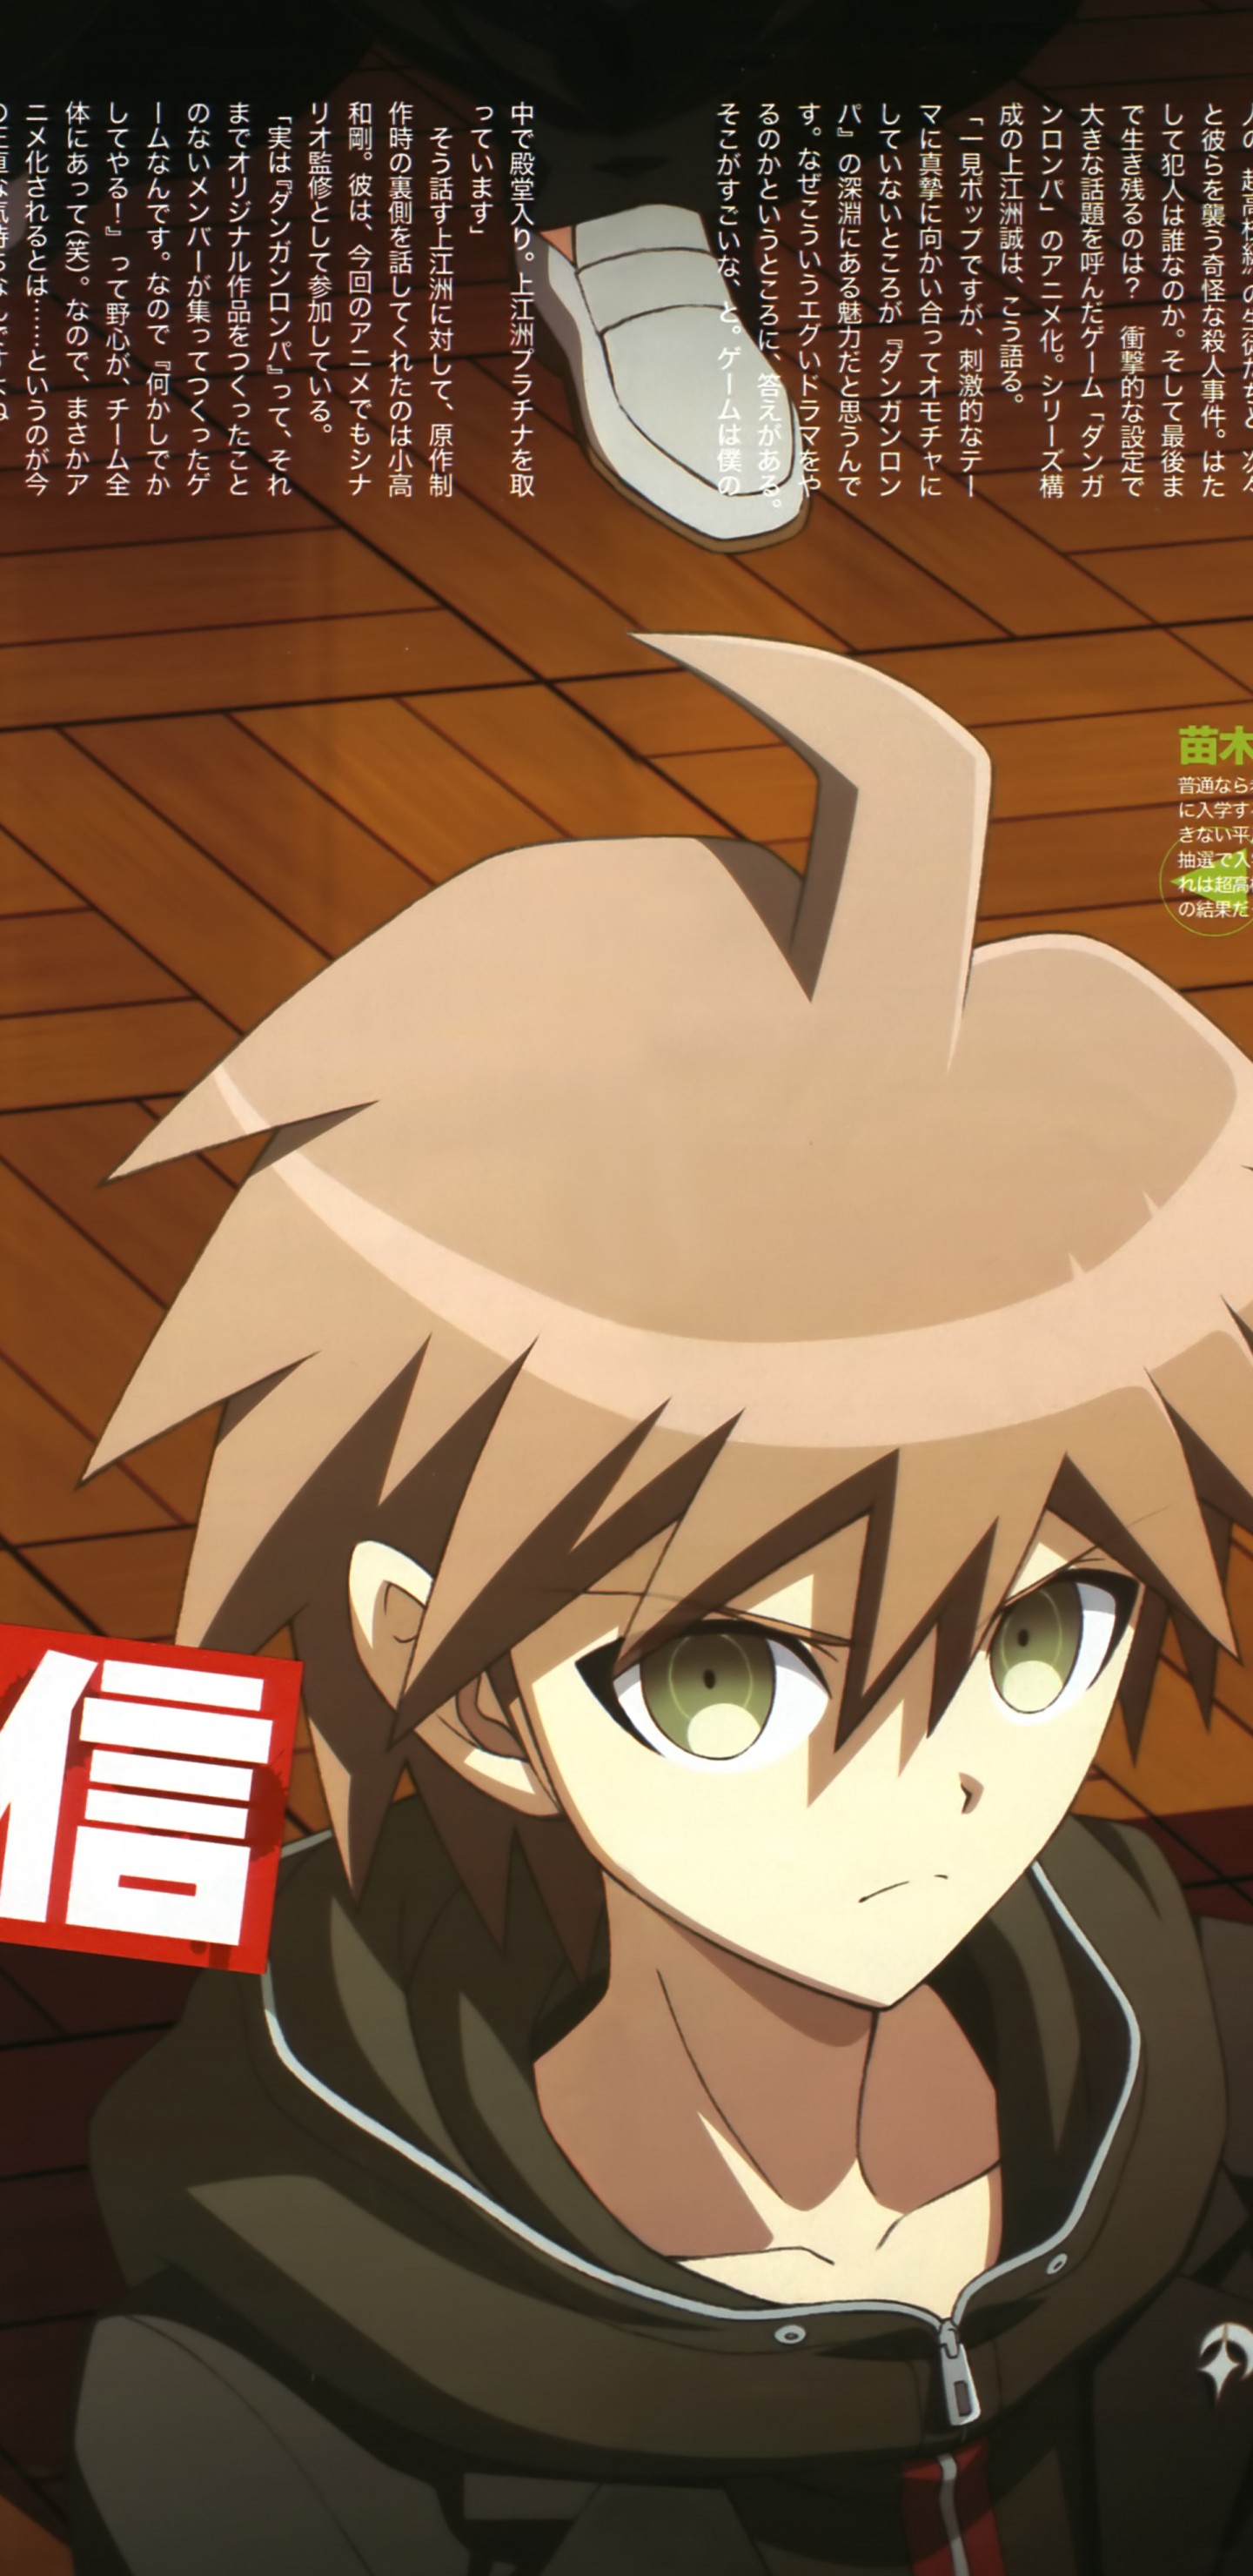 Download Anime Like Danganronpa, Asahina Danganronpa - Sayaka Maizono Y Naegi , HD Wallpaper & Backgrounds